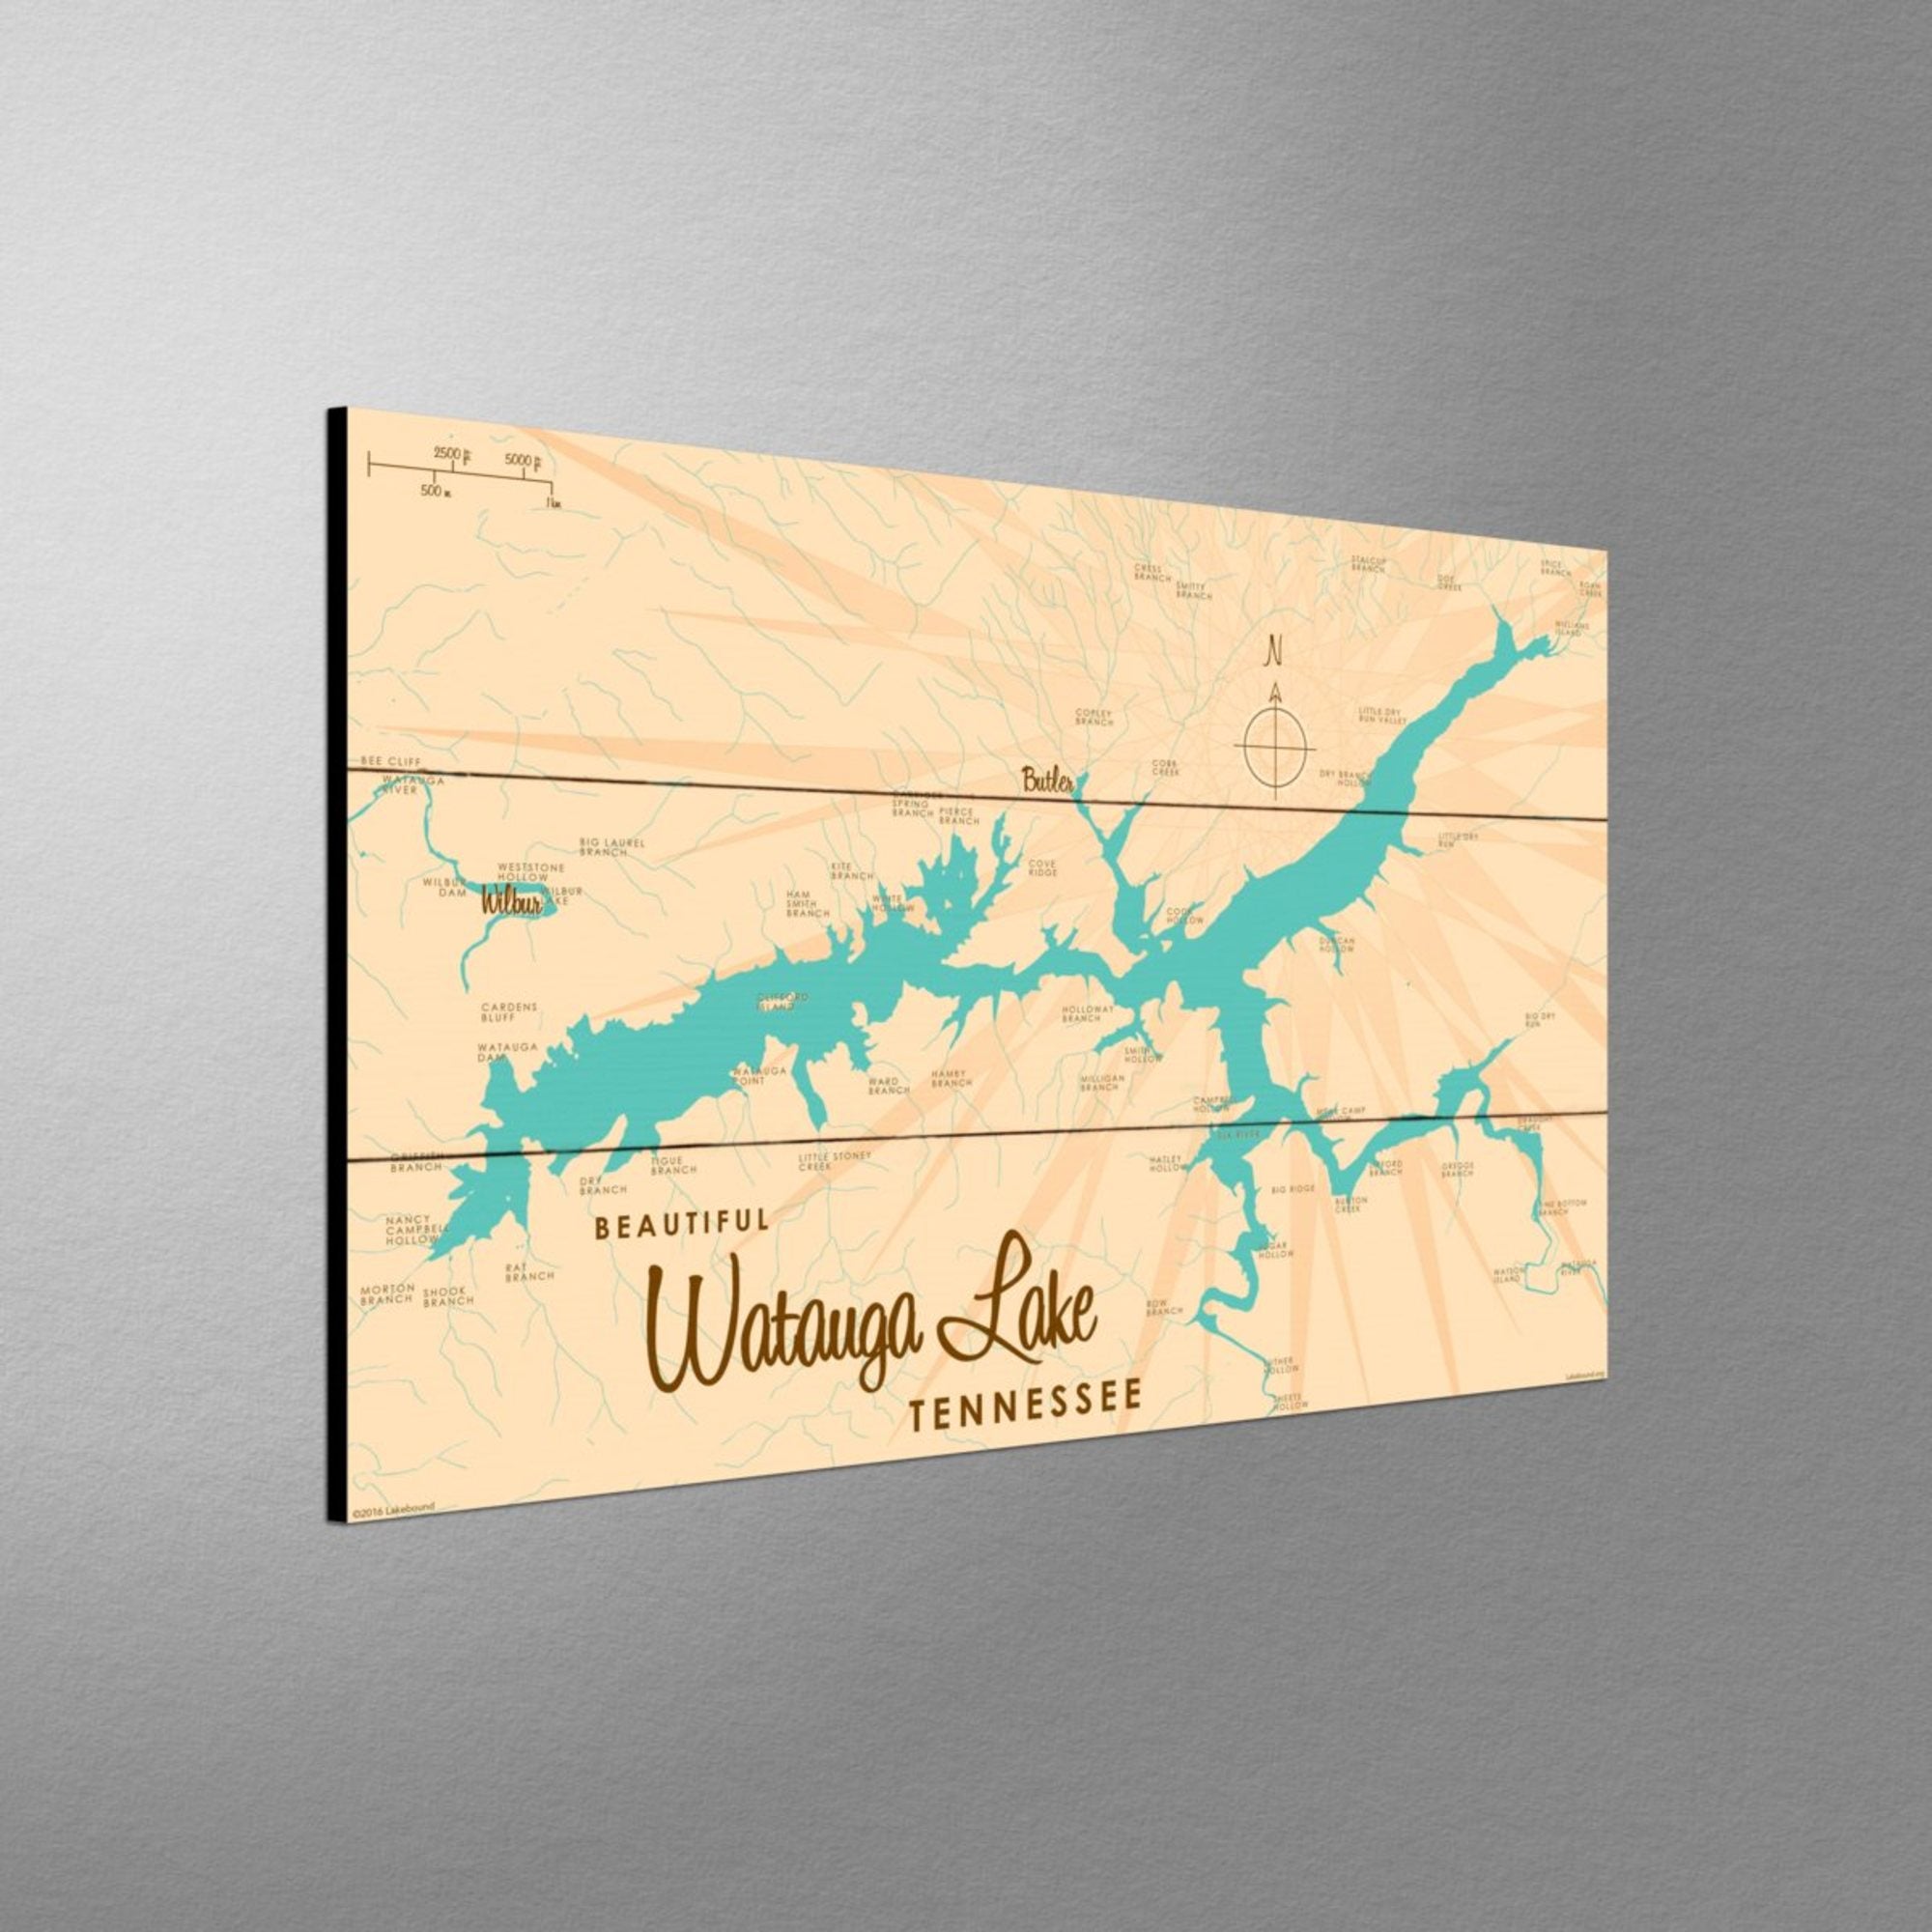 Watauga Lake Tennessee, Wood Sign Map Art